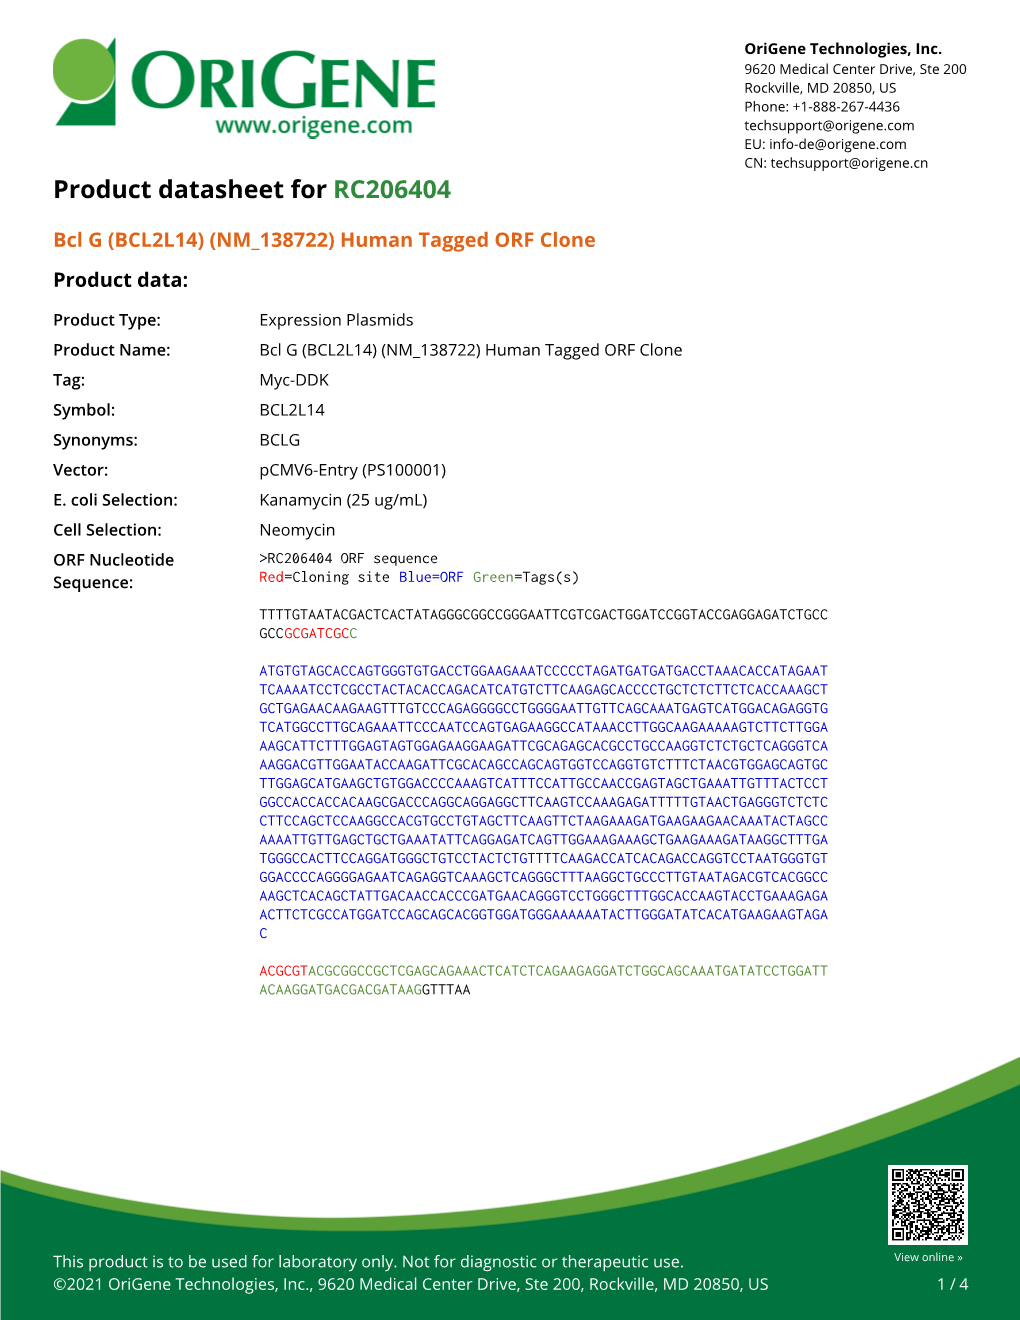 (BCL2L14) (NM 138722) Human Tagged ORF Clone Product Data